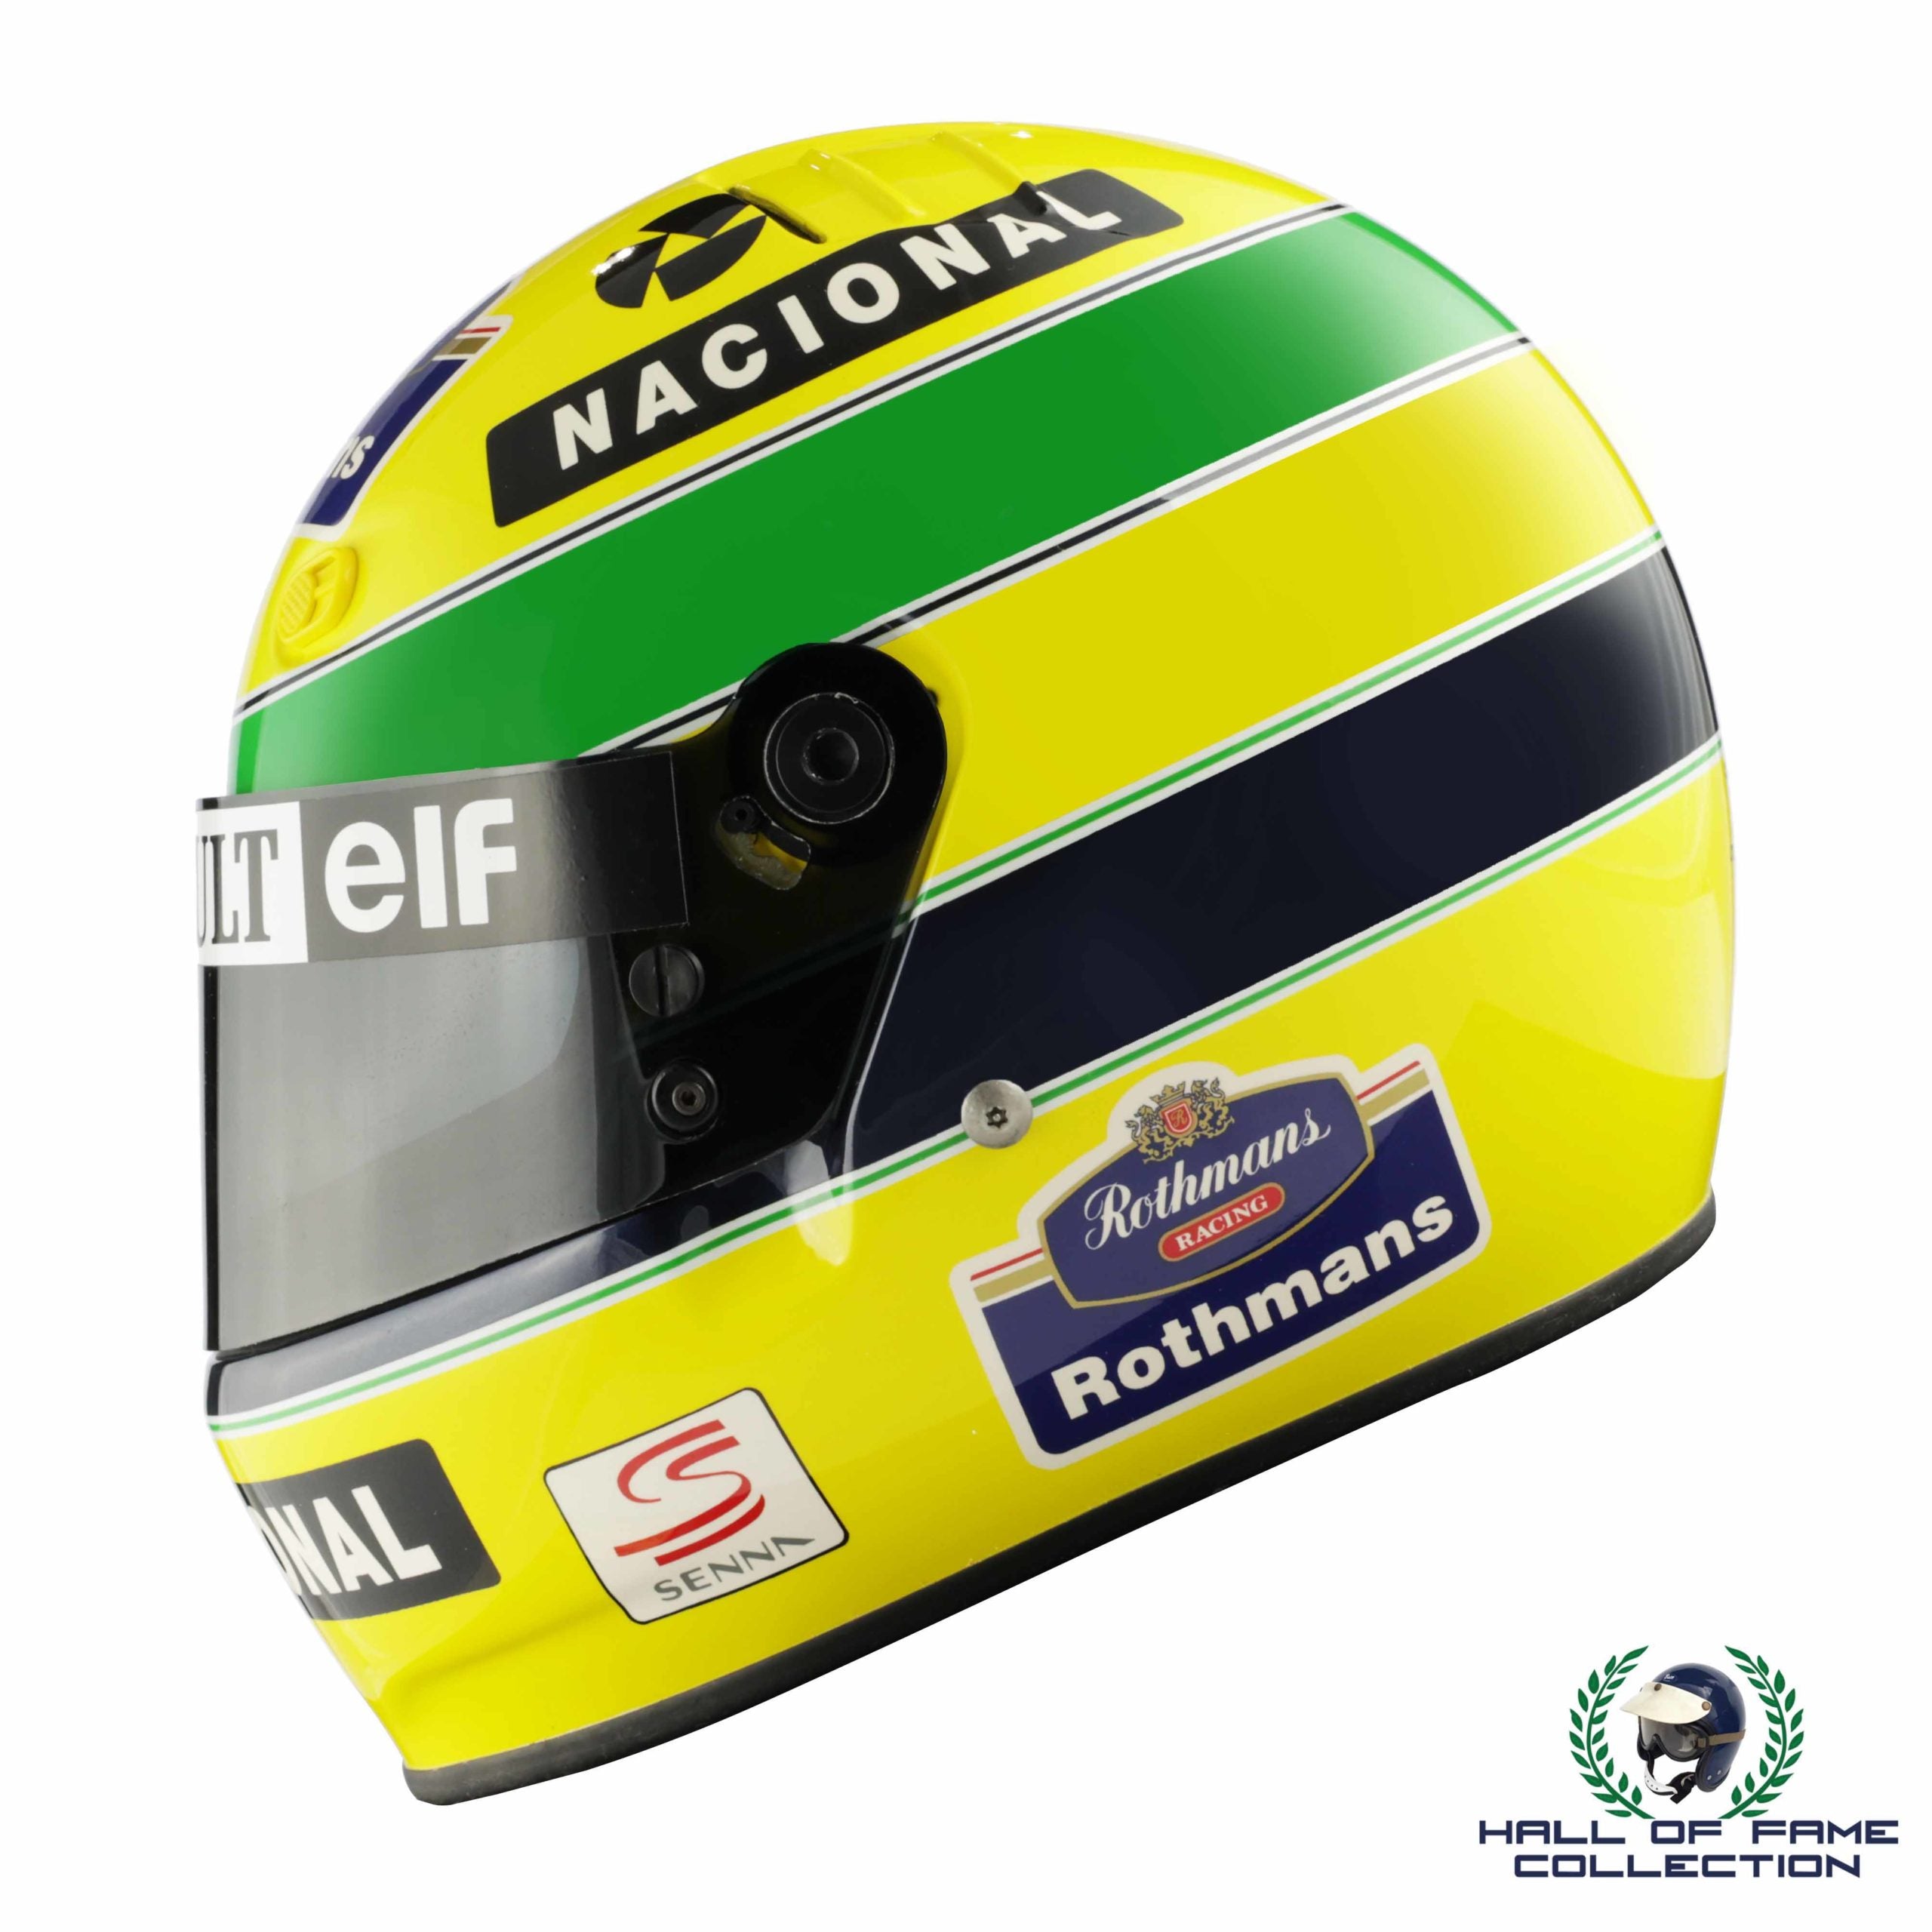 1994 Ayrton Senna Official Bell Limited Series Replica 88 of 1000 Williams F1 Helmet